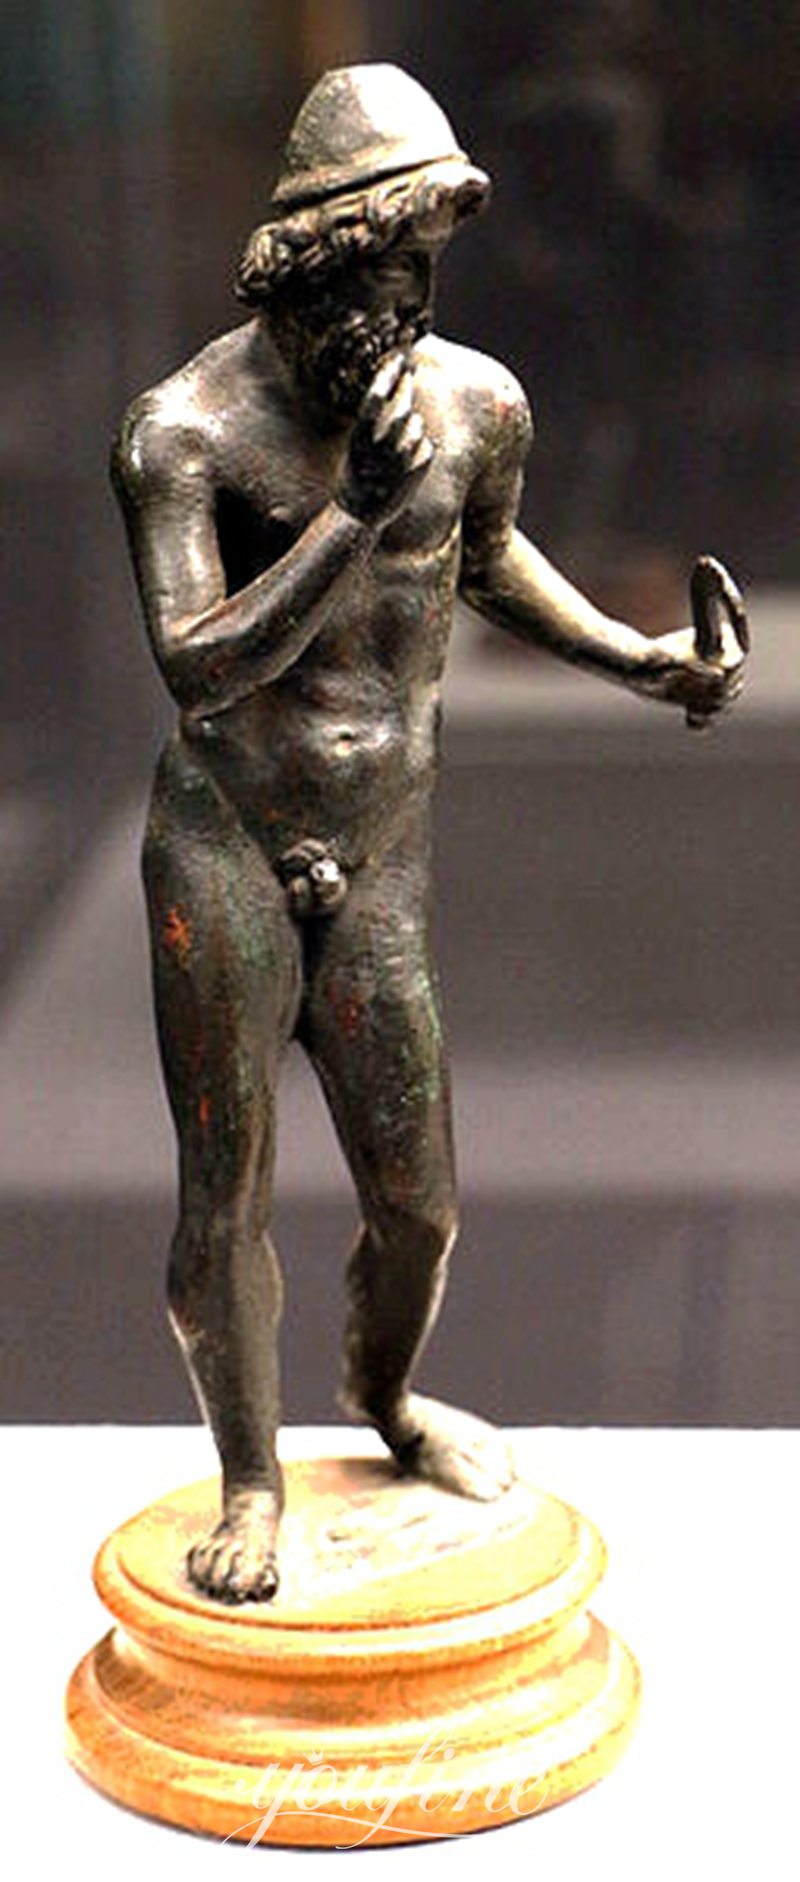 cronus greek god statue